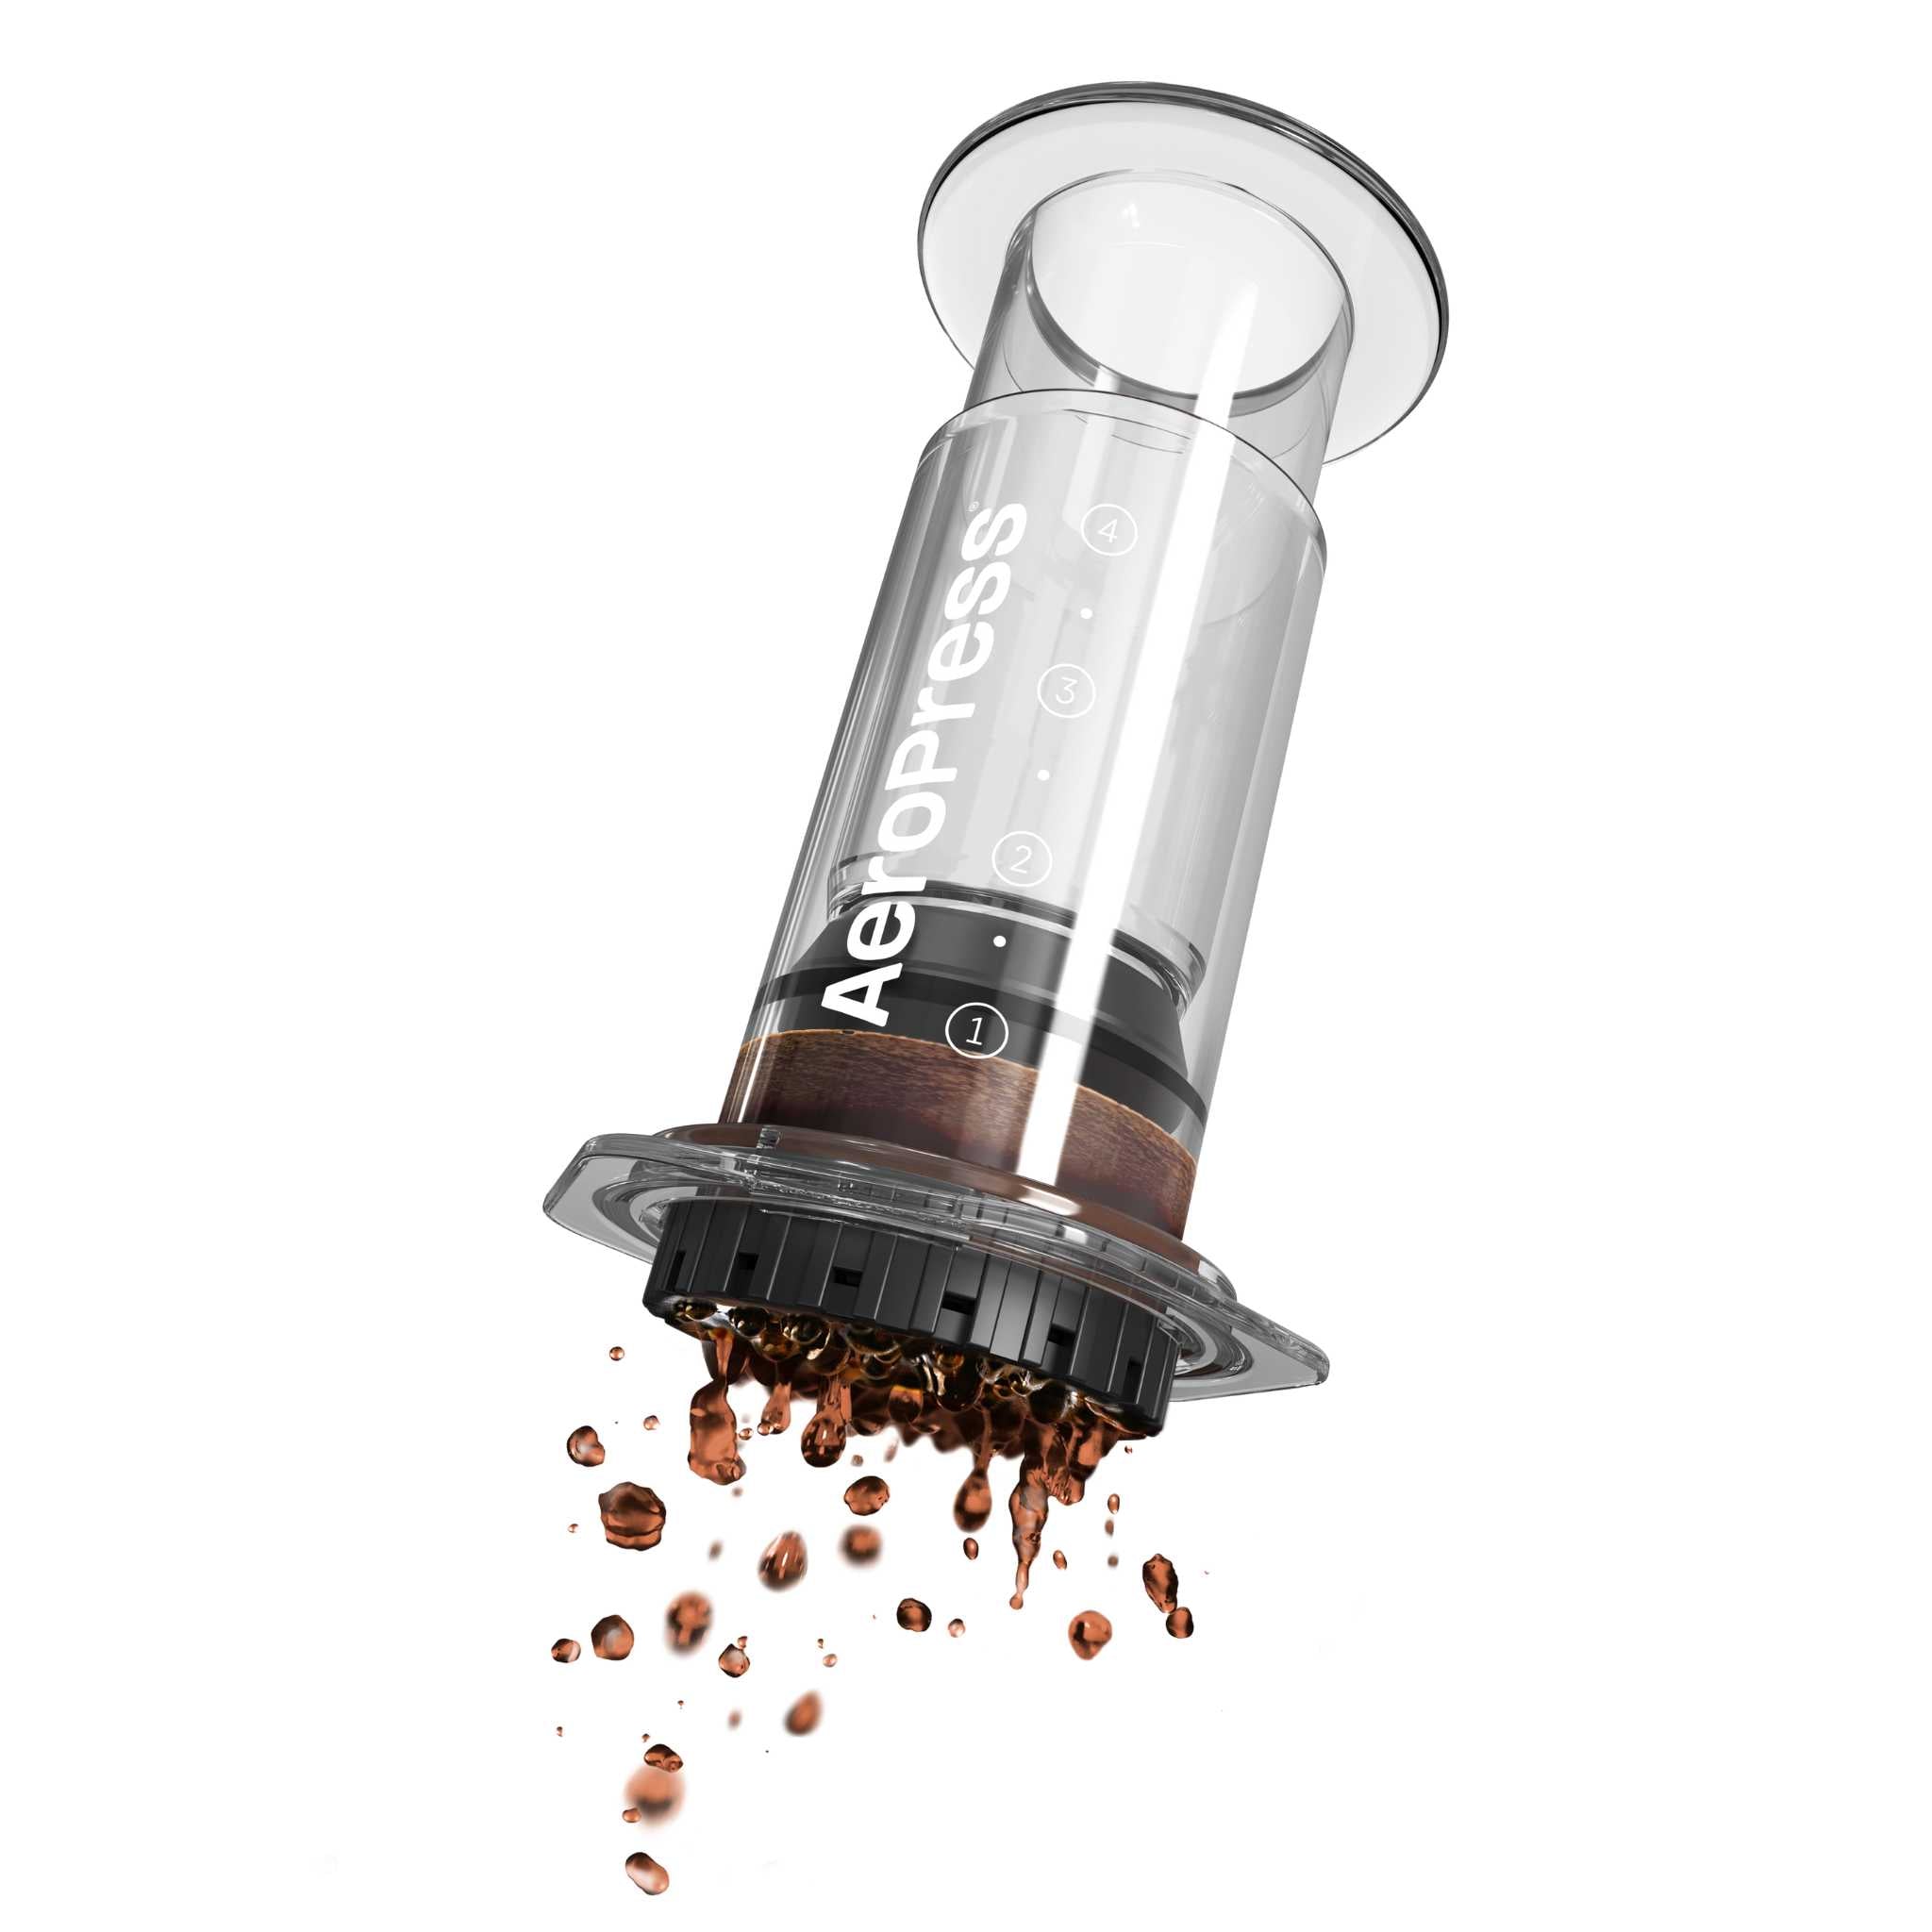 Aeropress CLEAR - Coffee & Espresso Maker